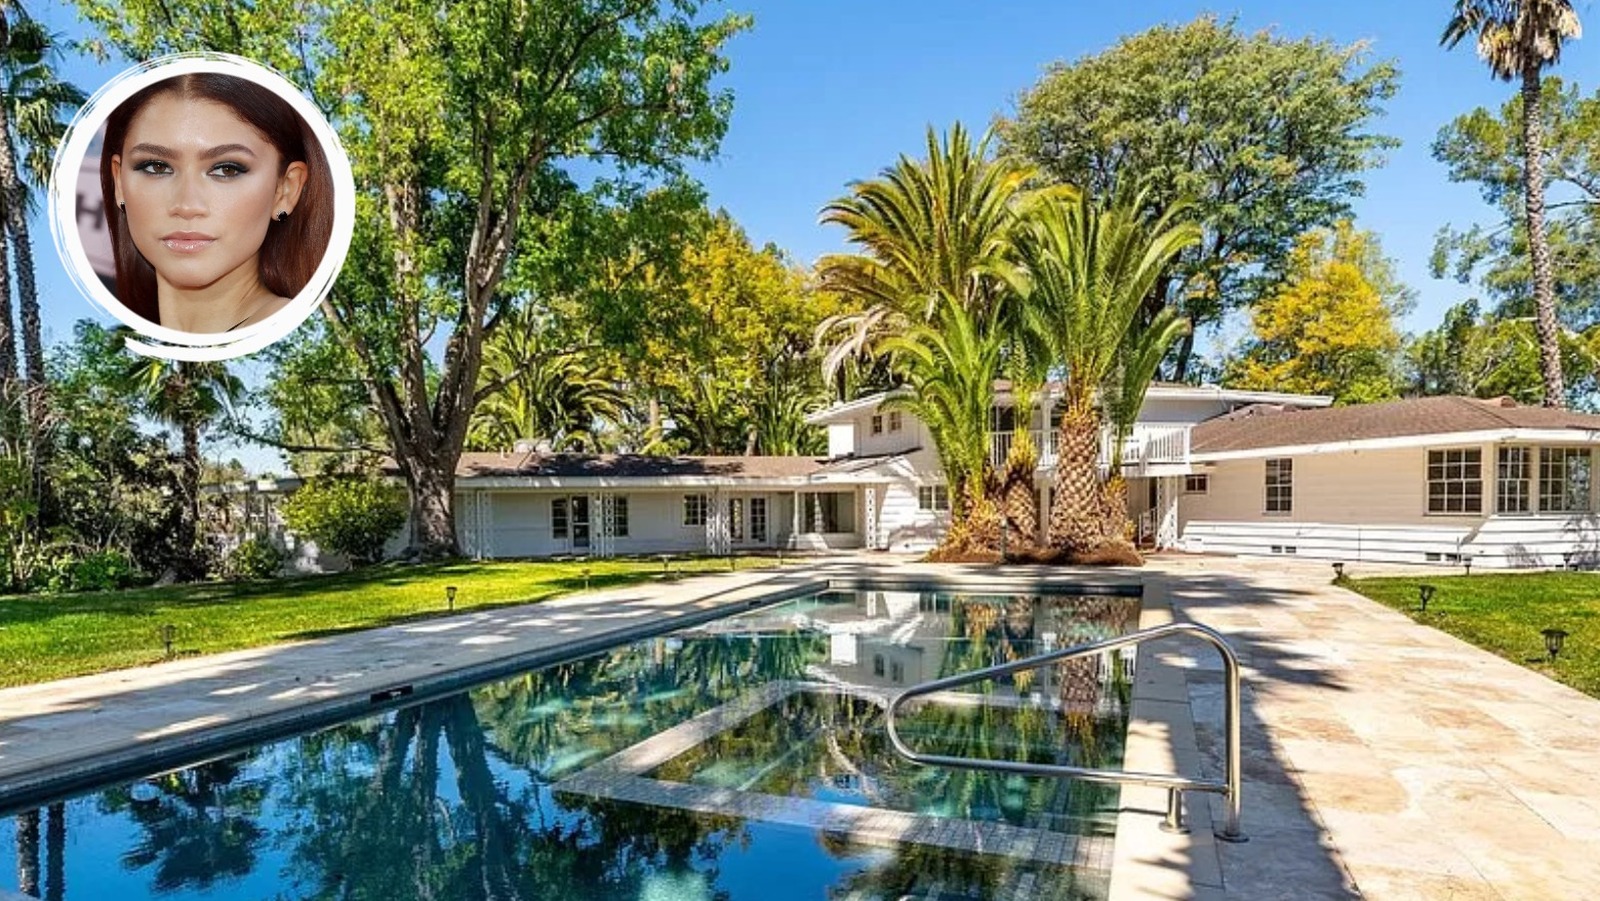 Zendaya's home in Northridge, California worth $2 million